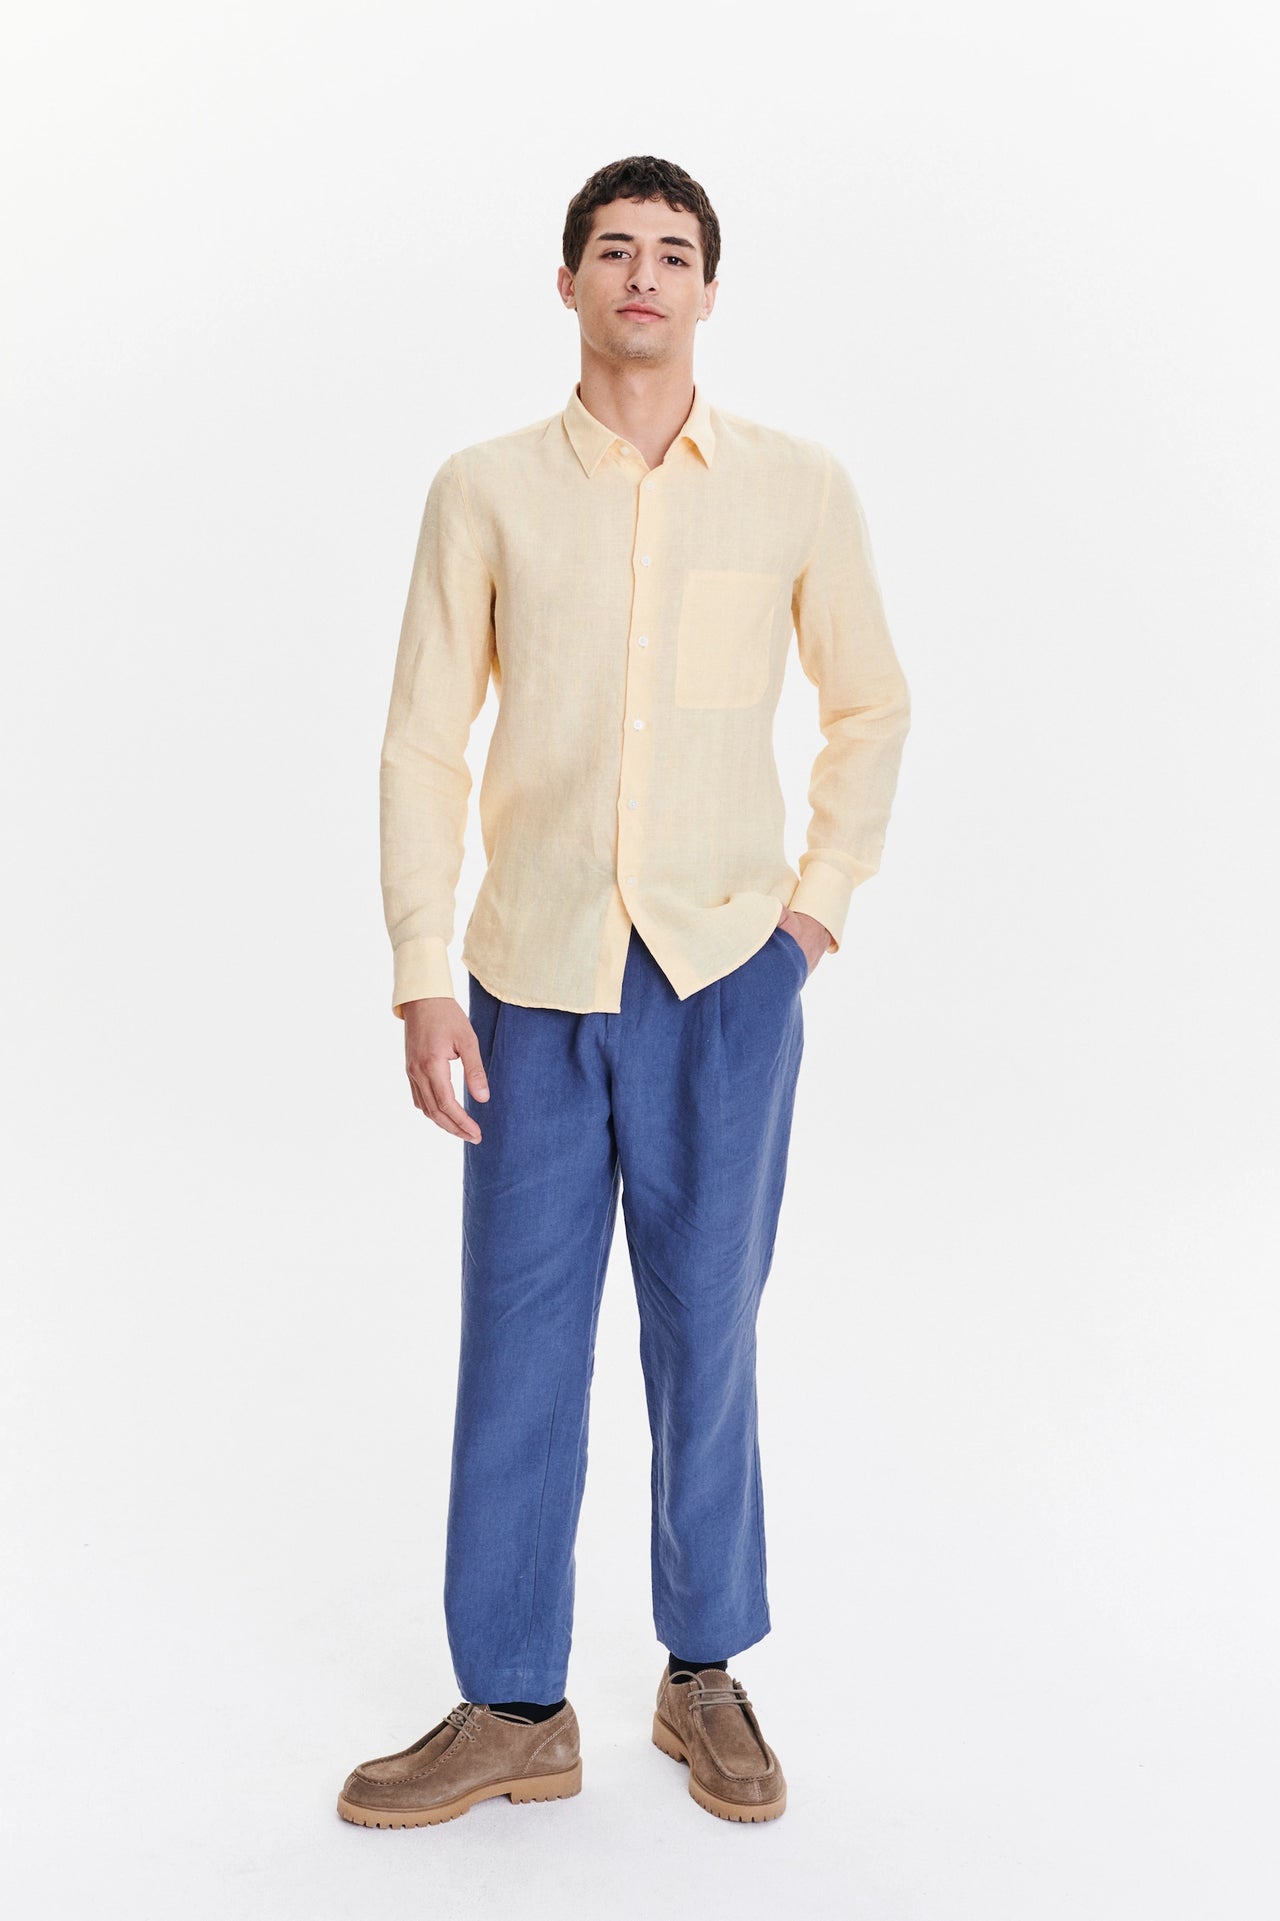 Feel Good Shirt in a Cream Yellow Italian Linen